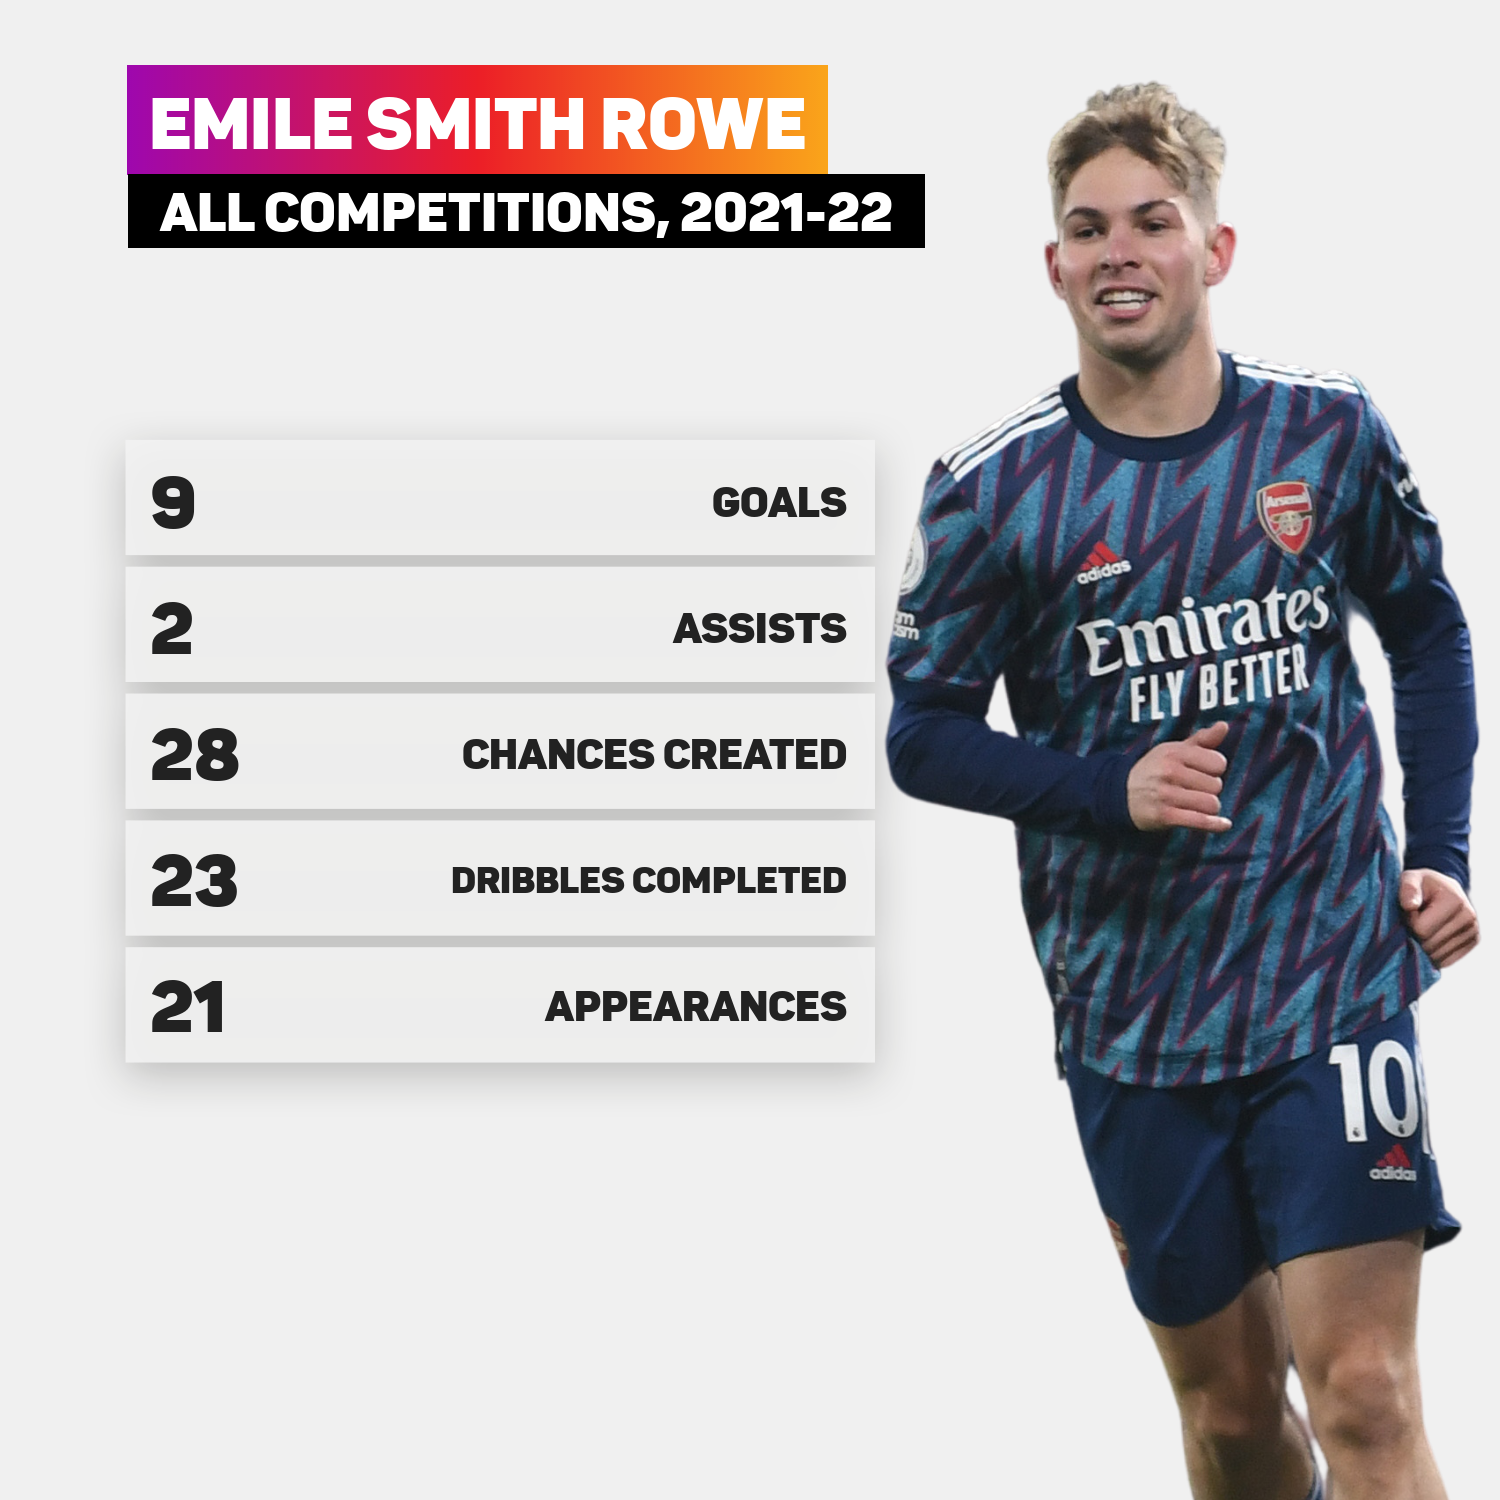 Emile Smith Rowe is Arsenal's leading scorer